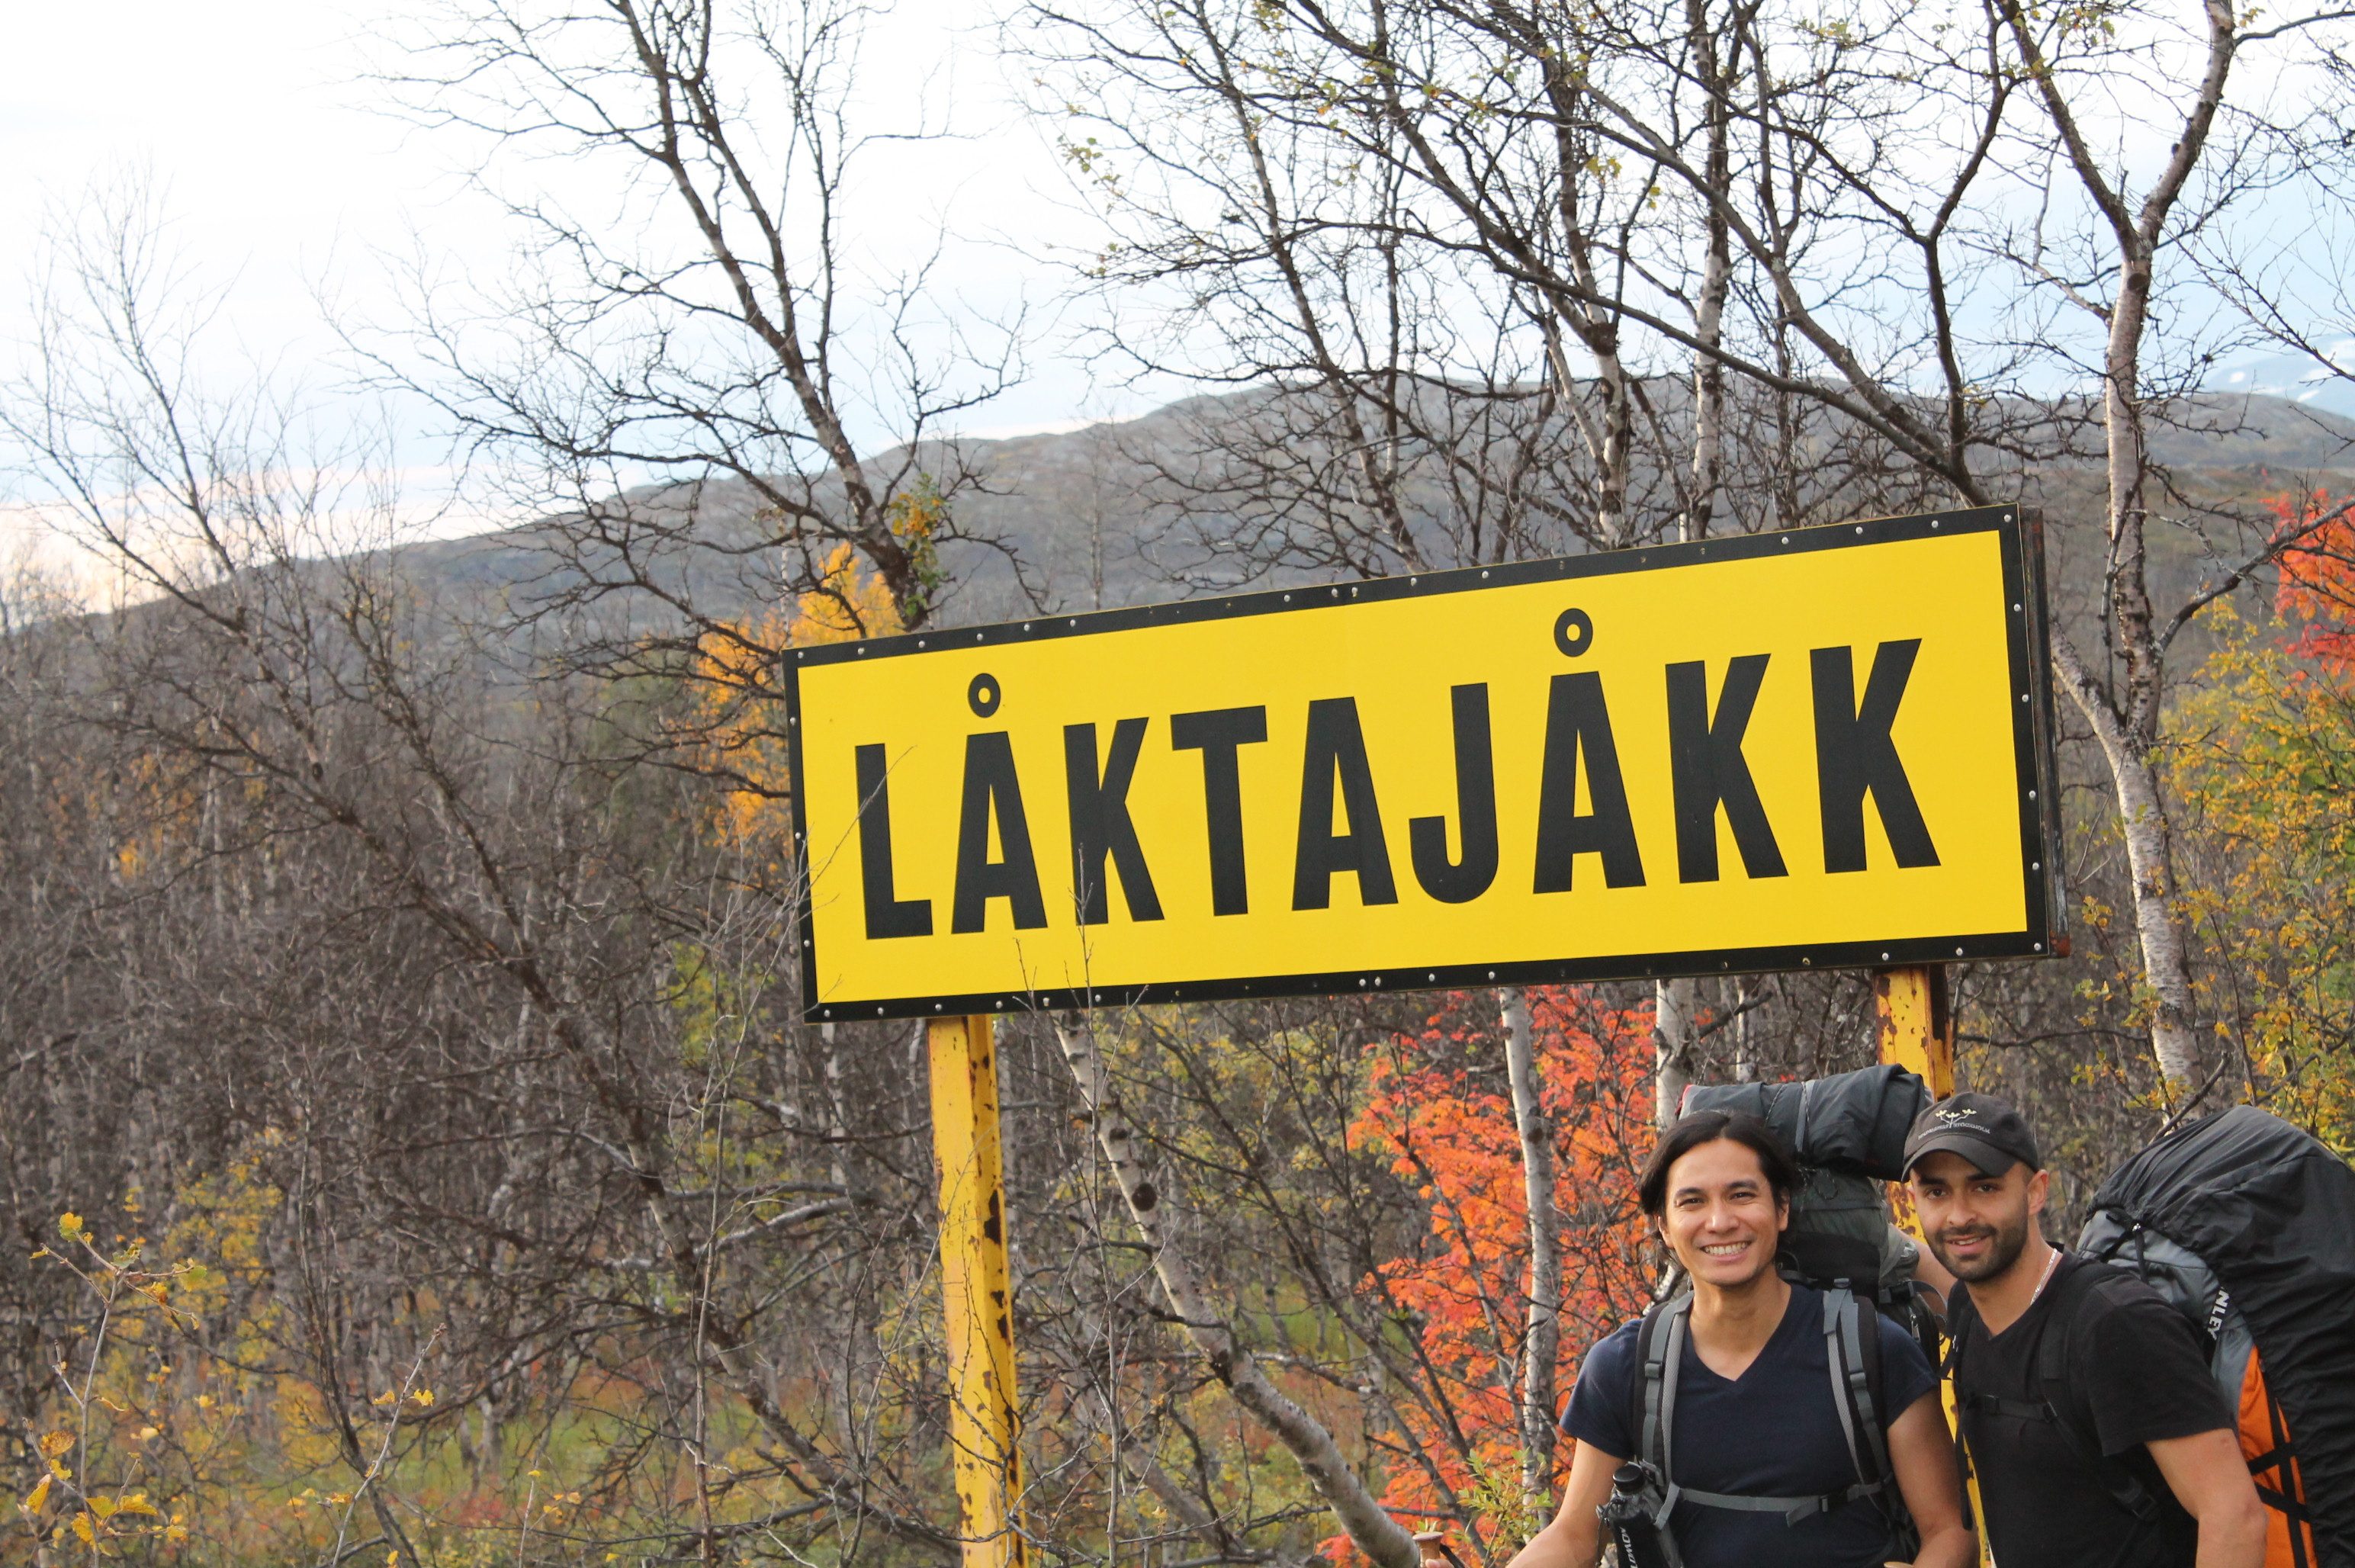 LAKTAJAKK. Daniel (right) and myself, shortly after arriving at Låktajåkk. Photo by D. Cano 